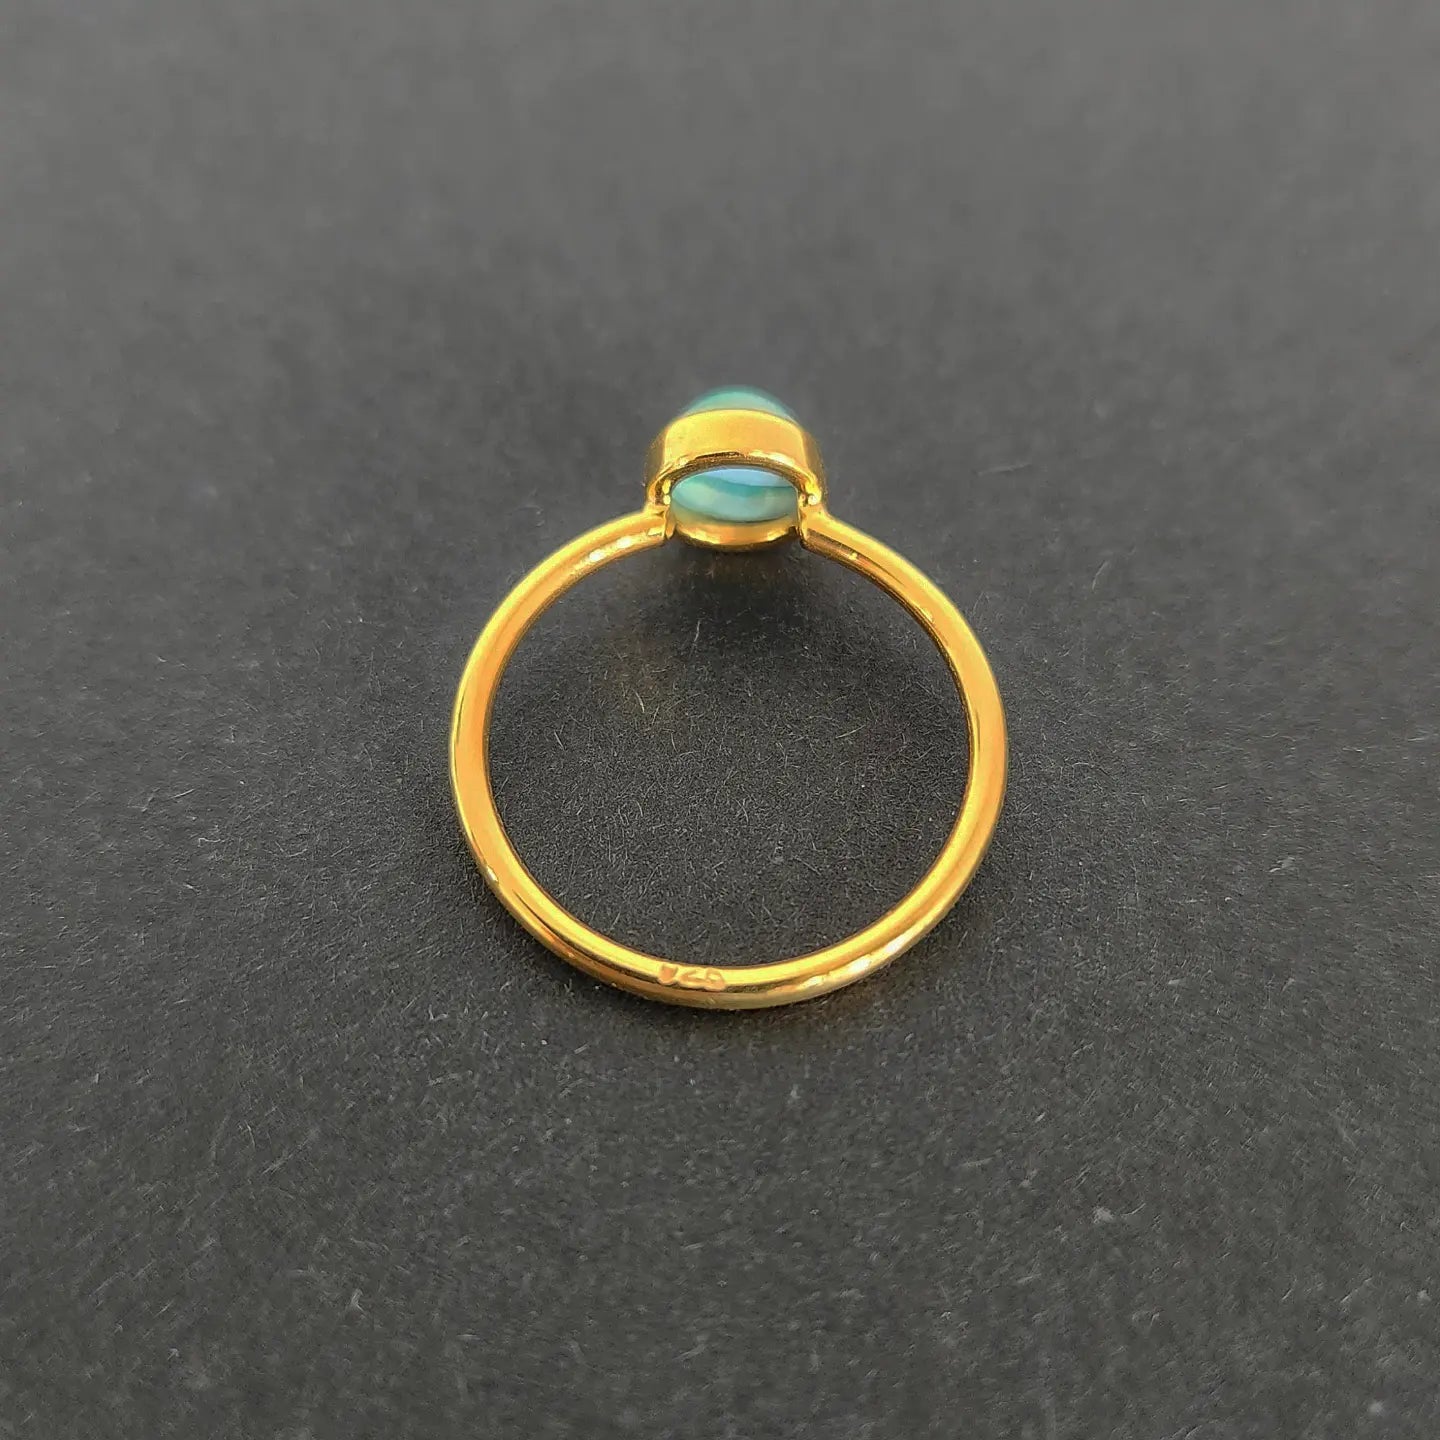 Mangguh Ring Bali Silver 925 Gold Plated Turquoise Stone